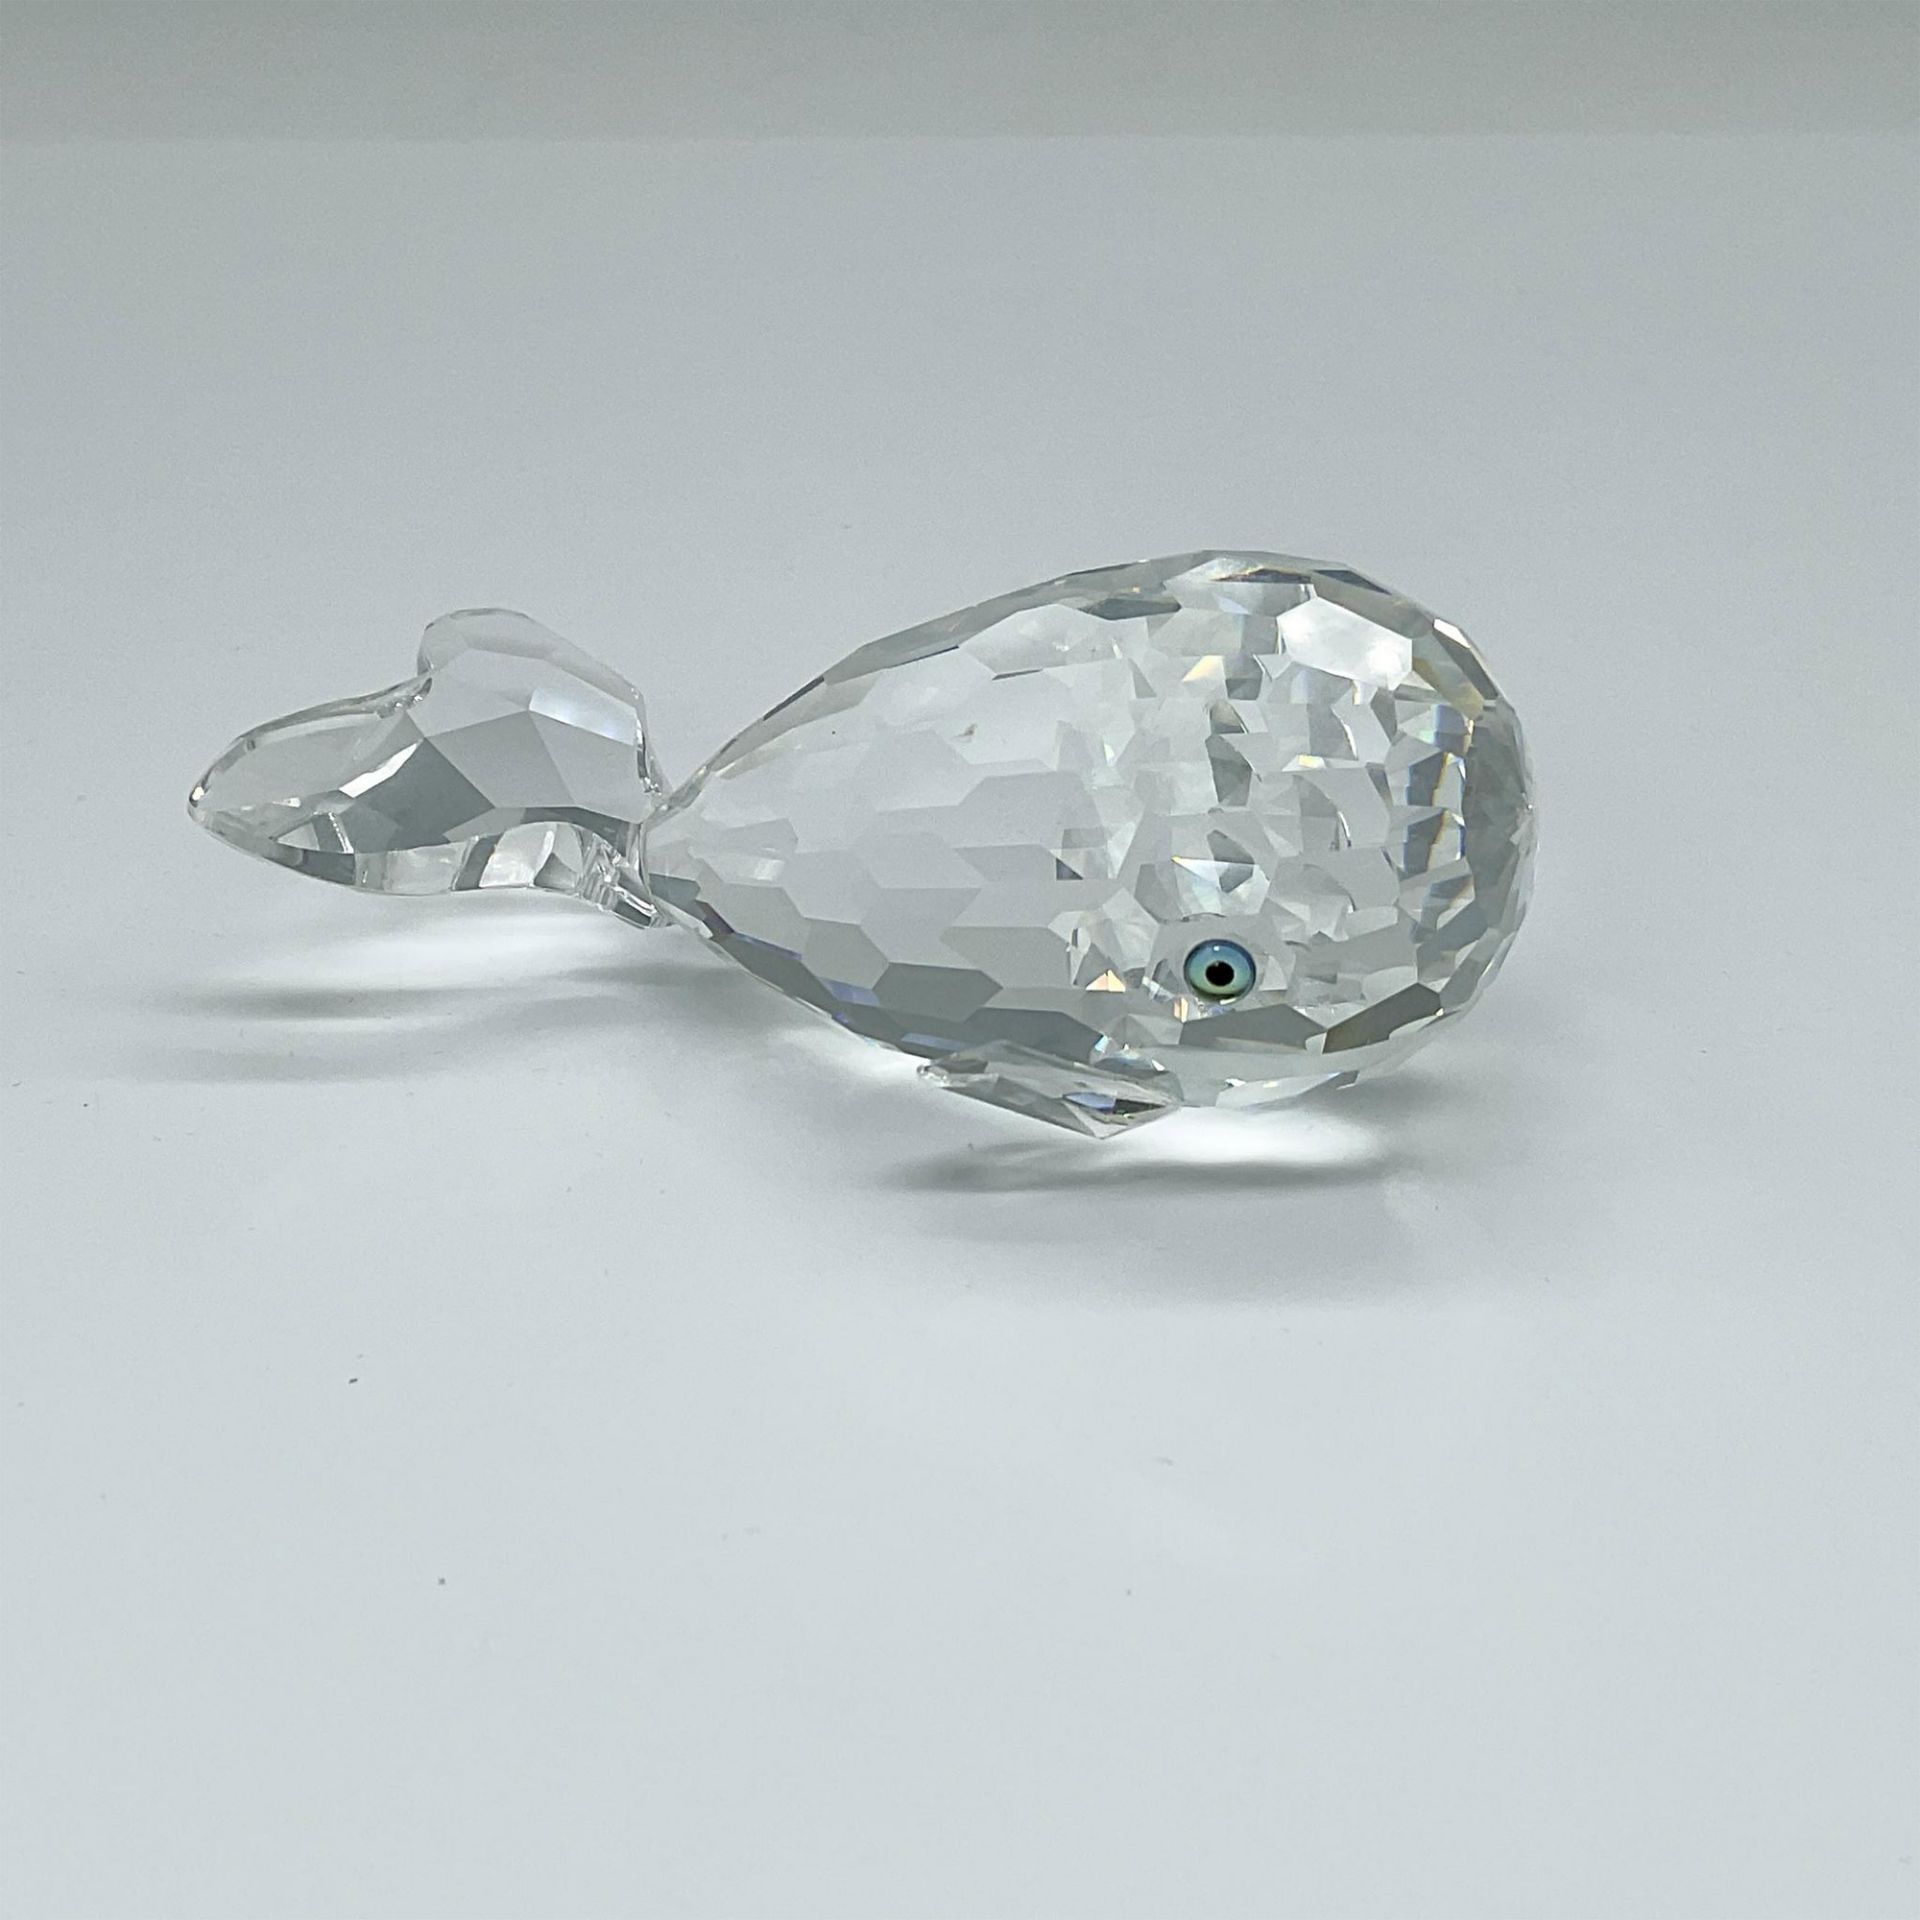 Swarovski Crystal Figurine, Whale - Image 2 of 3